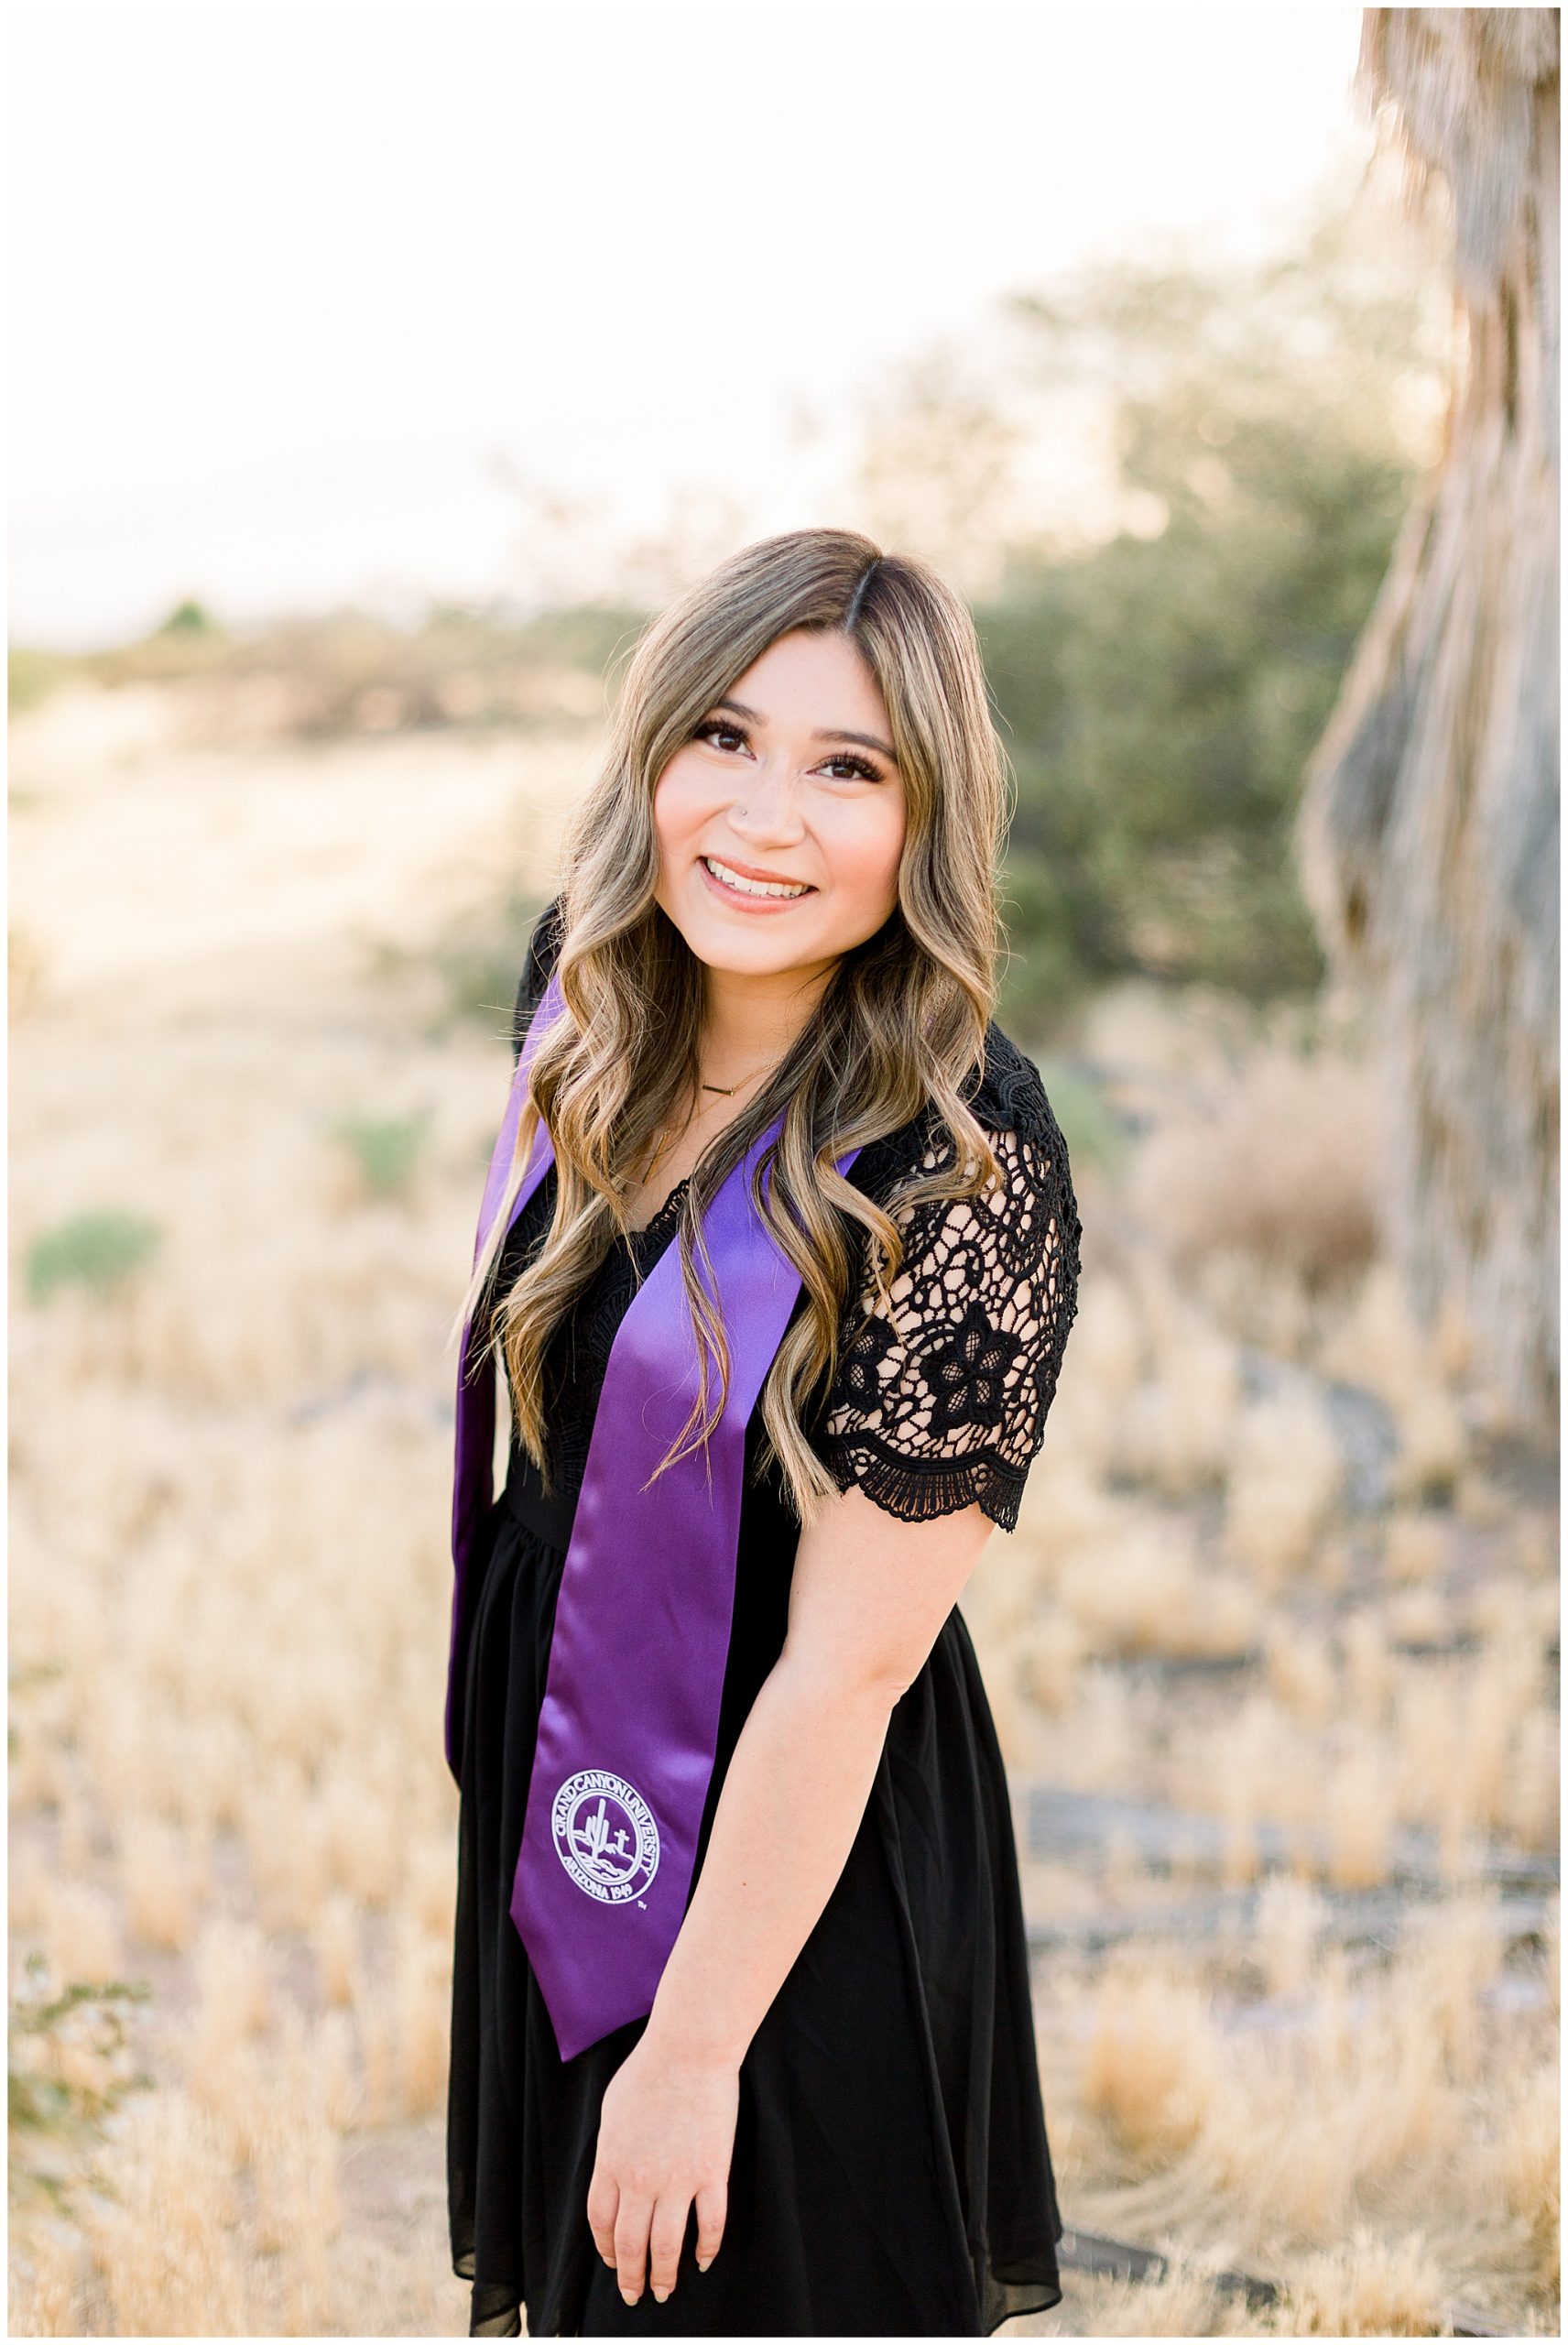 Aly-Kirk-Photo-Mesa-Arizona-College-Senior-Graduation-Photographer-Grand-Canyon-University